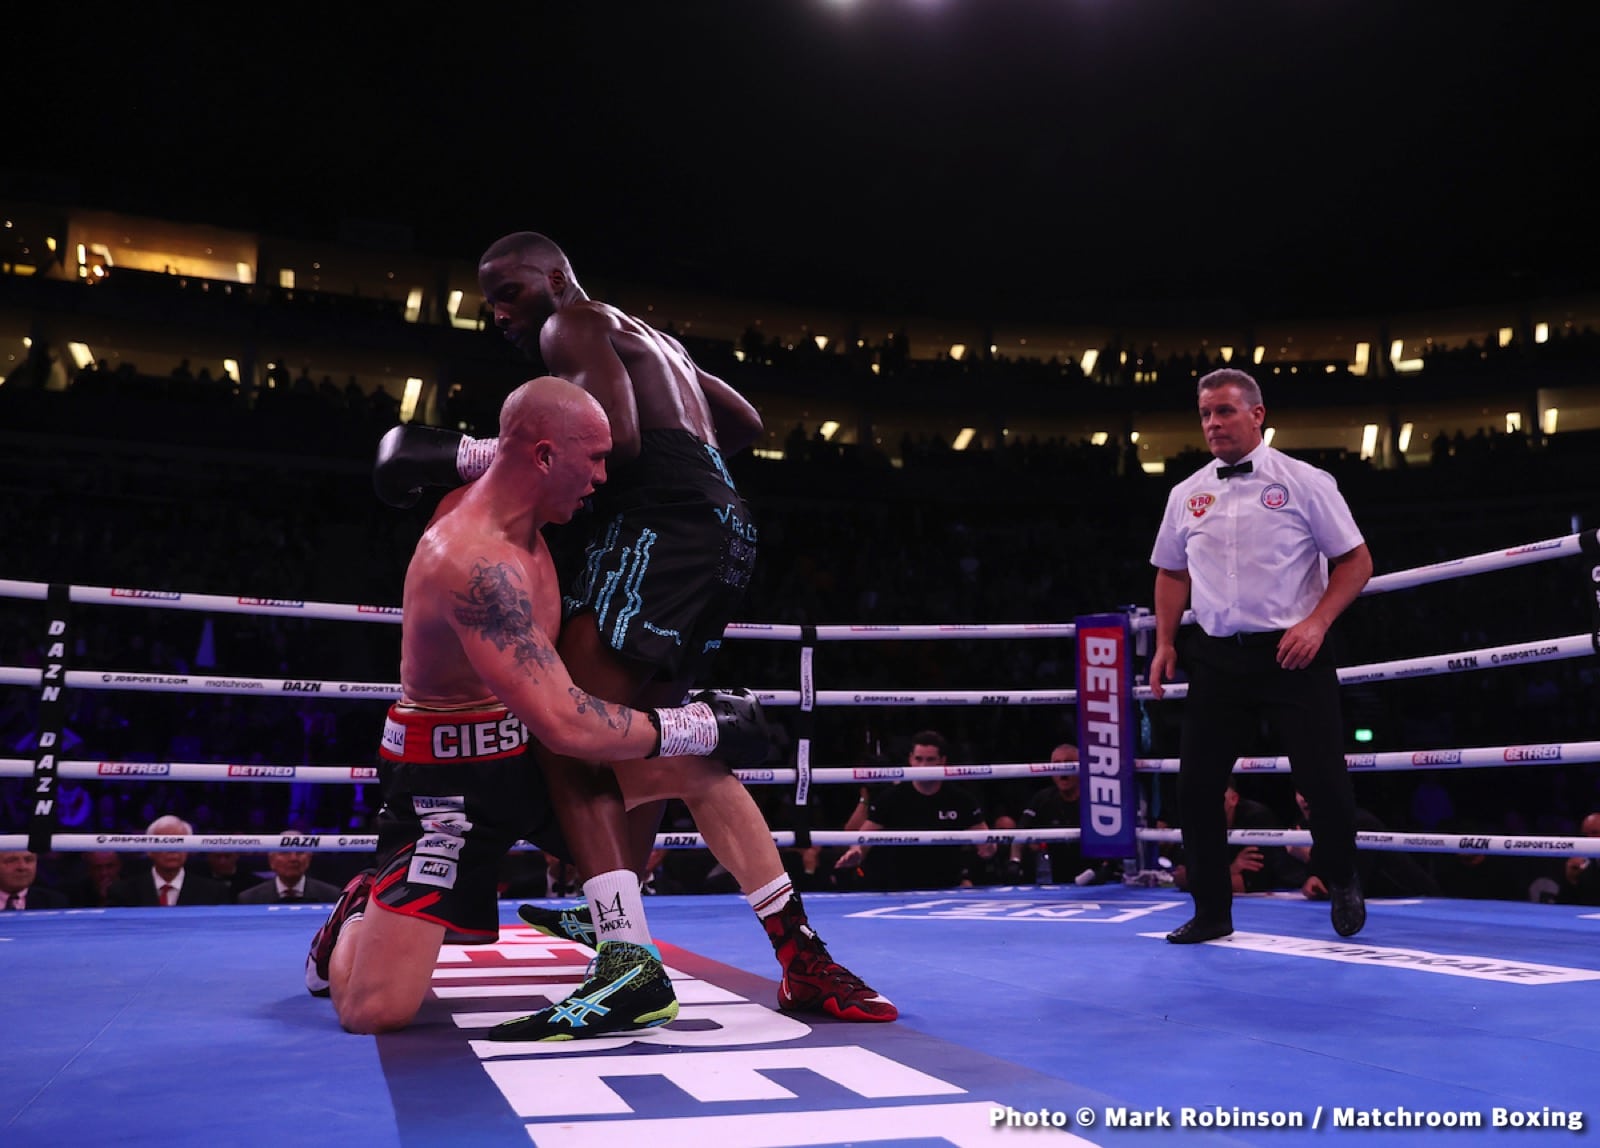 Lawrence Okolie, Michal Cieslak: boxing image / photo